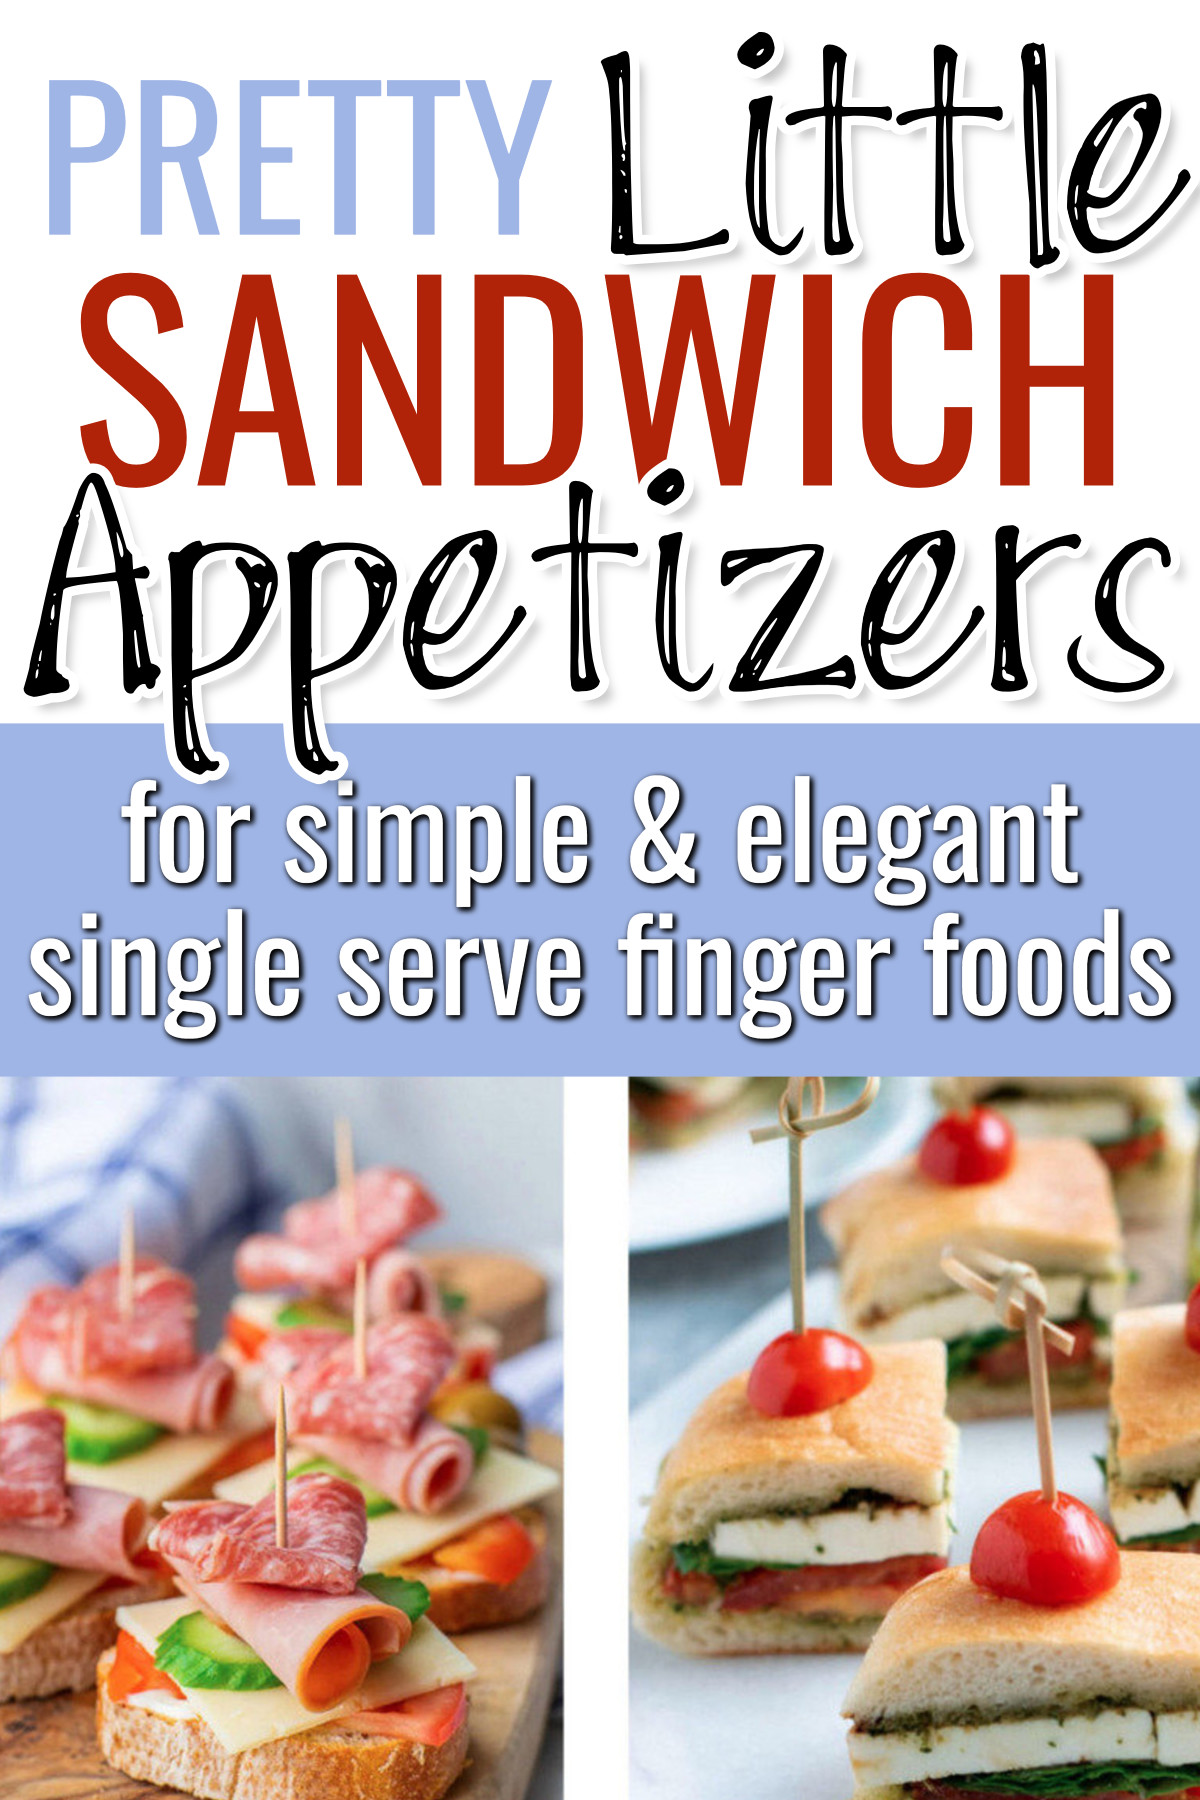 Pretty little sandwich appetizers for simple elegant single serve small bites finger foods